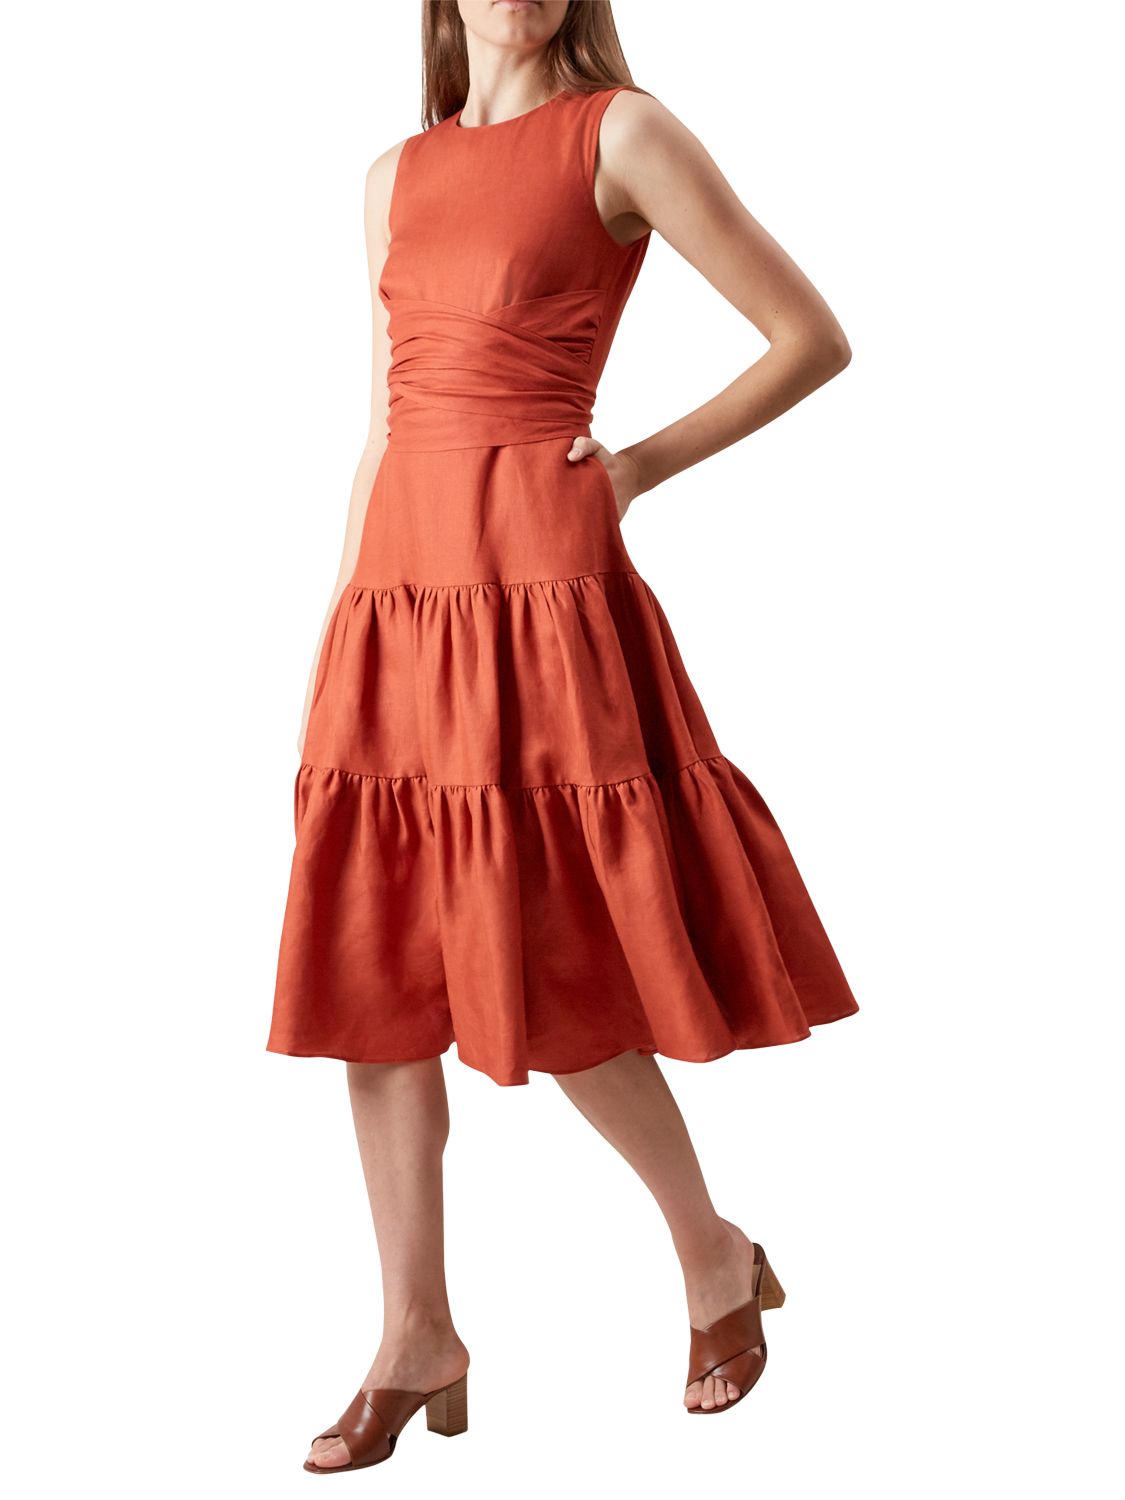 Hobbs Seville Dress, Cayenne Red, 12